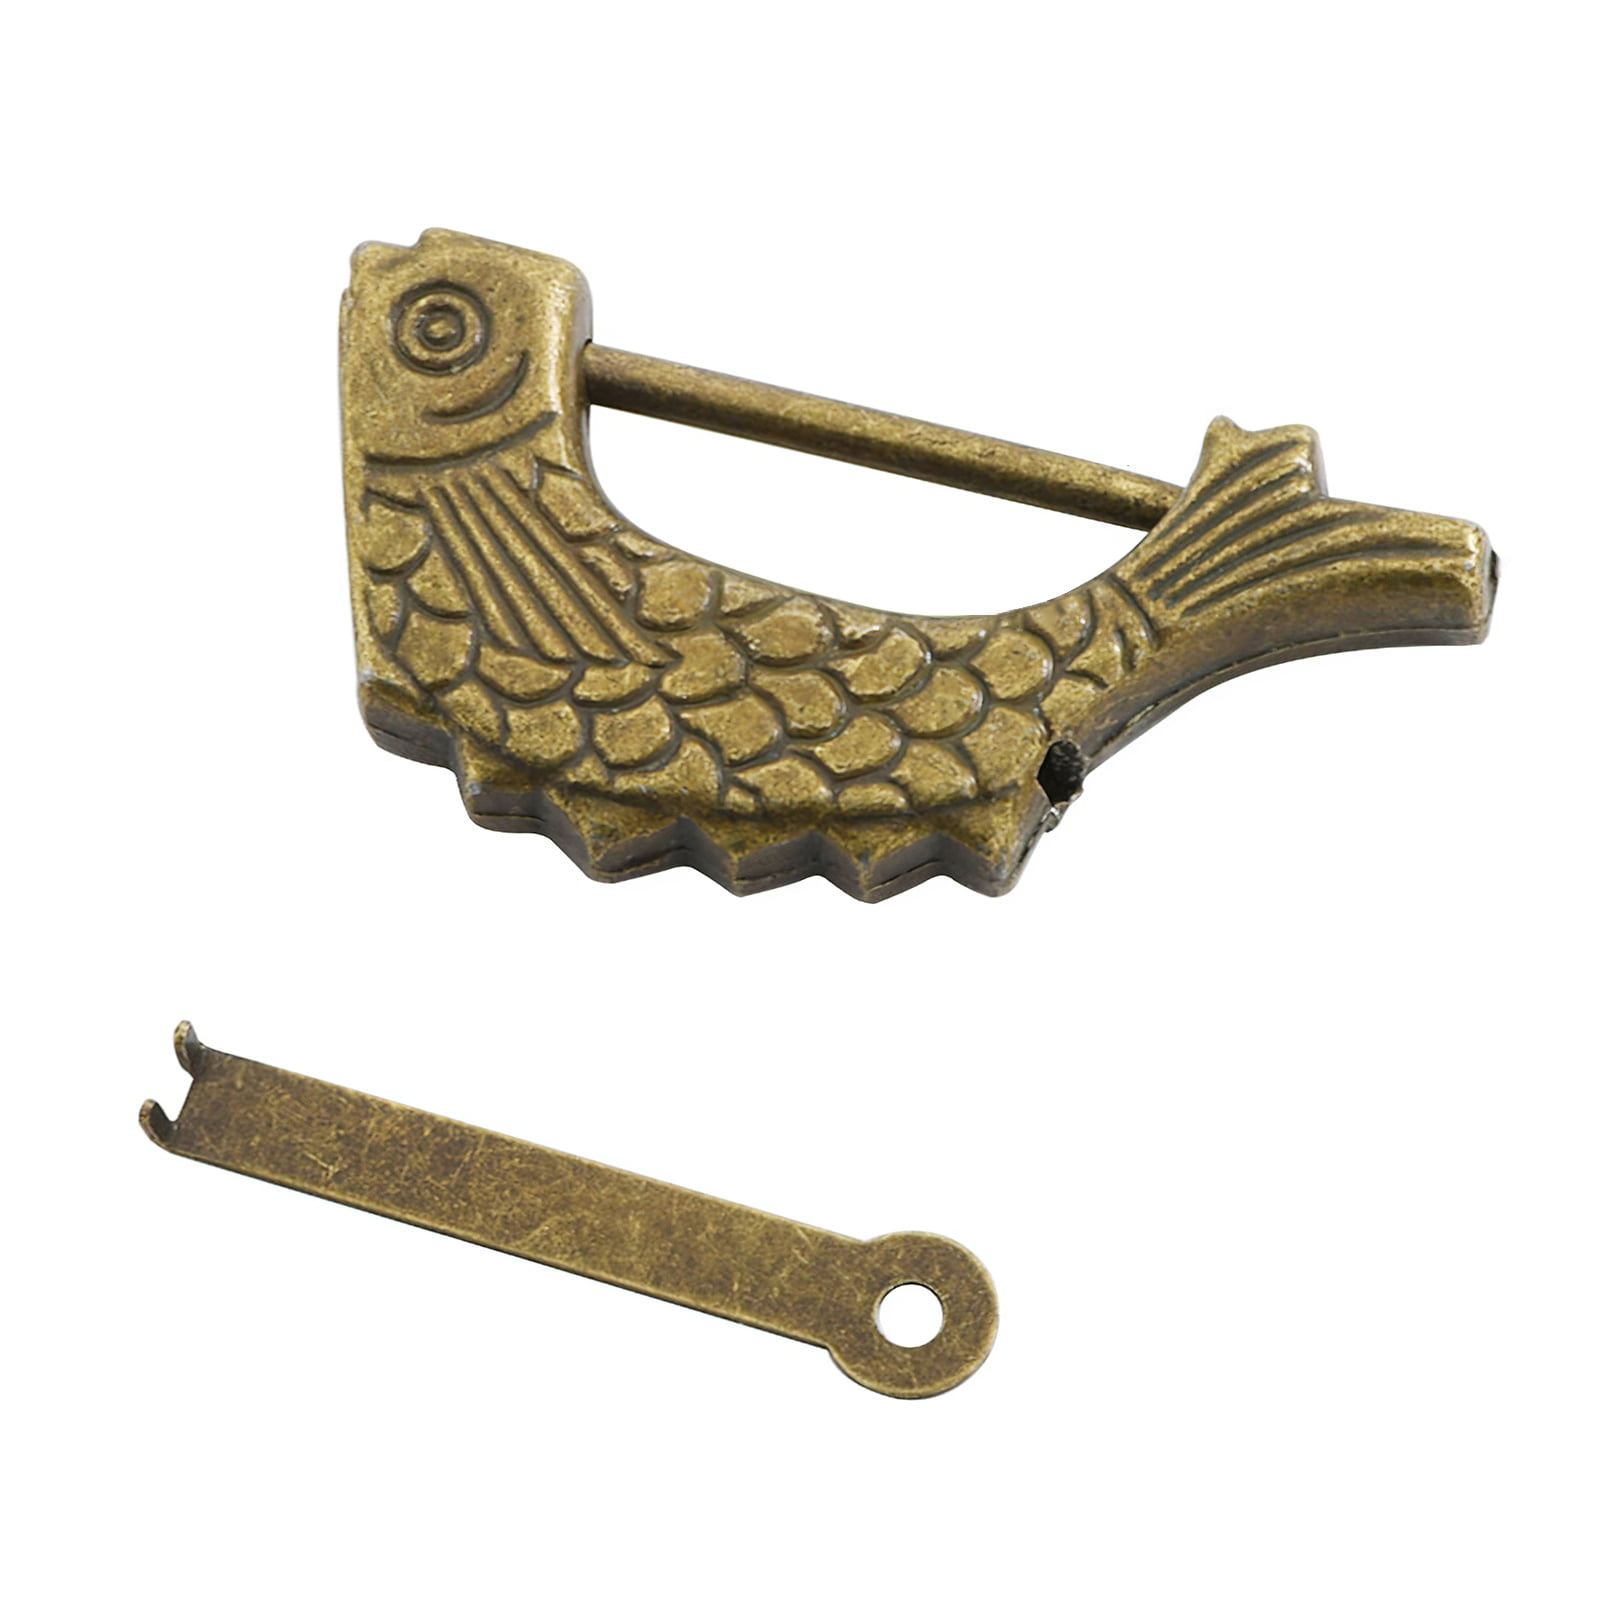 Details about   Golden Fish Shape Lock Antique Finish Handmade Brass Padlock & Keys Home Decor M 